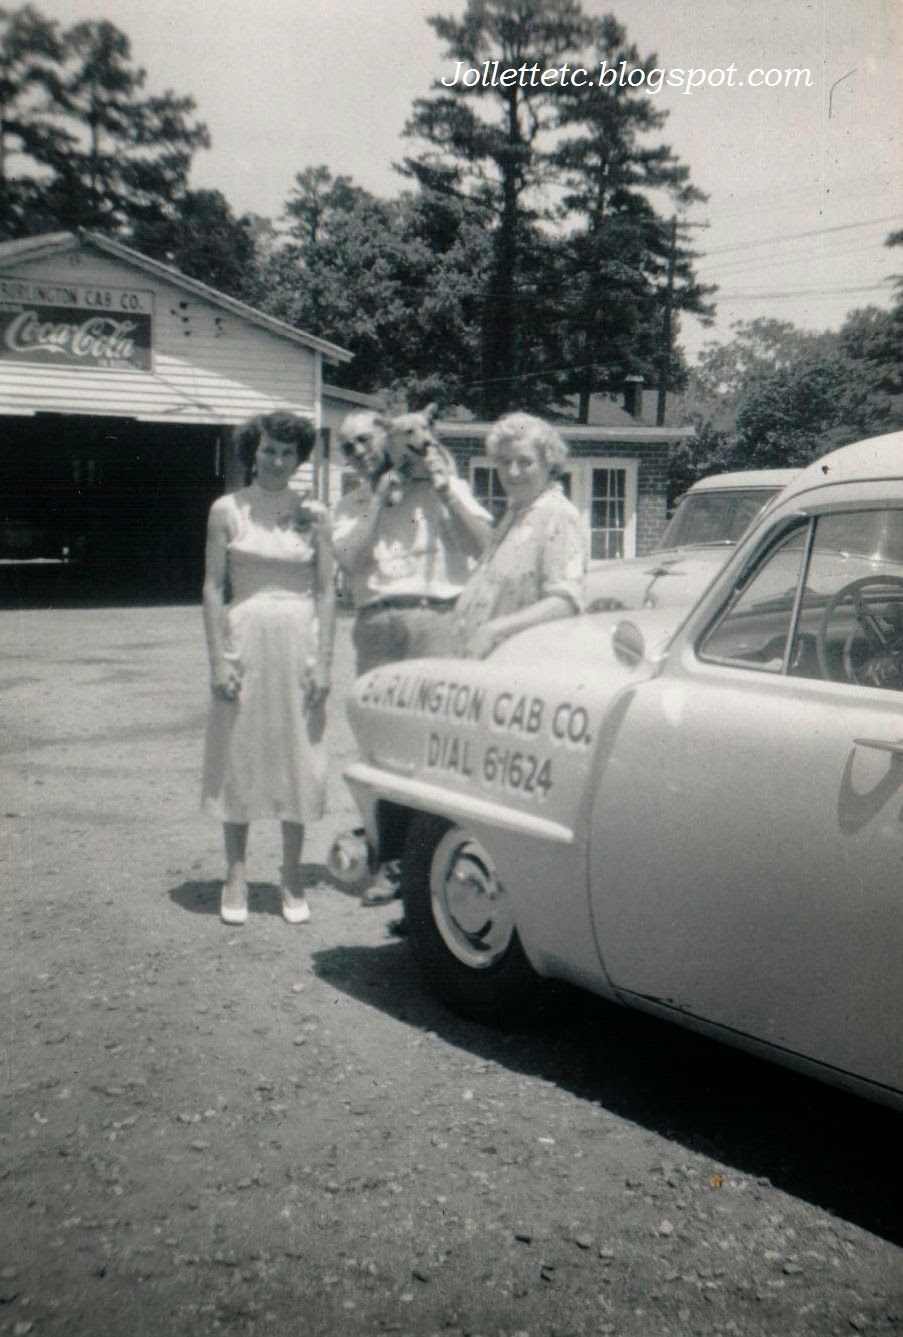 Burlington Cab Company 1956